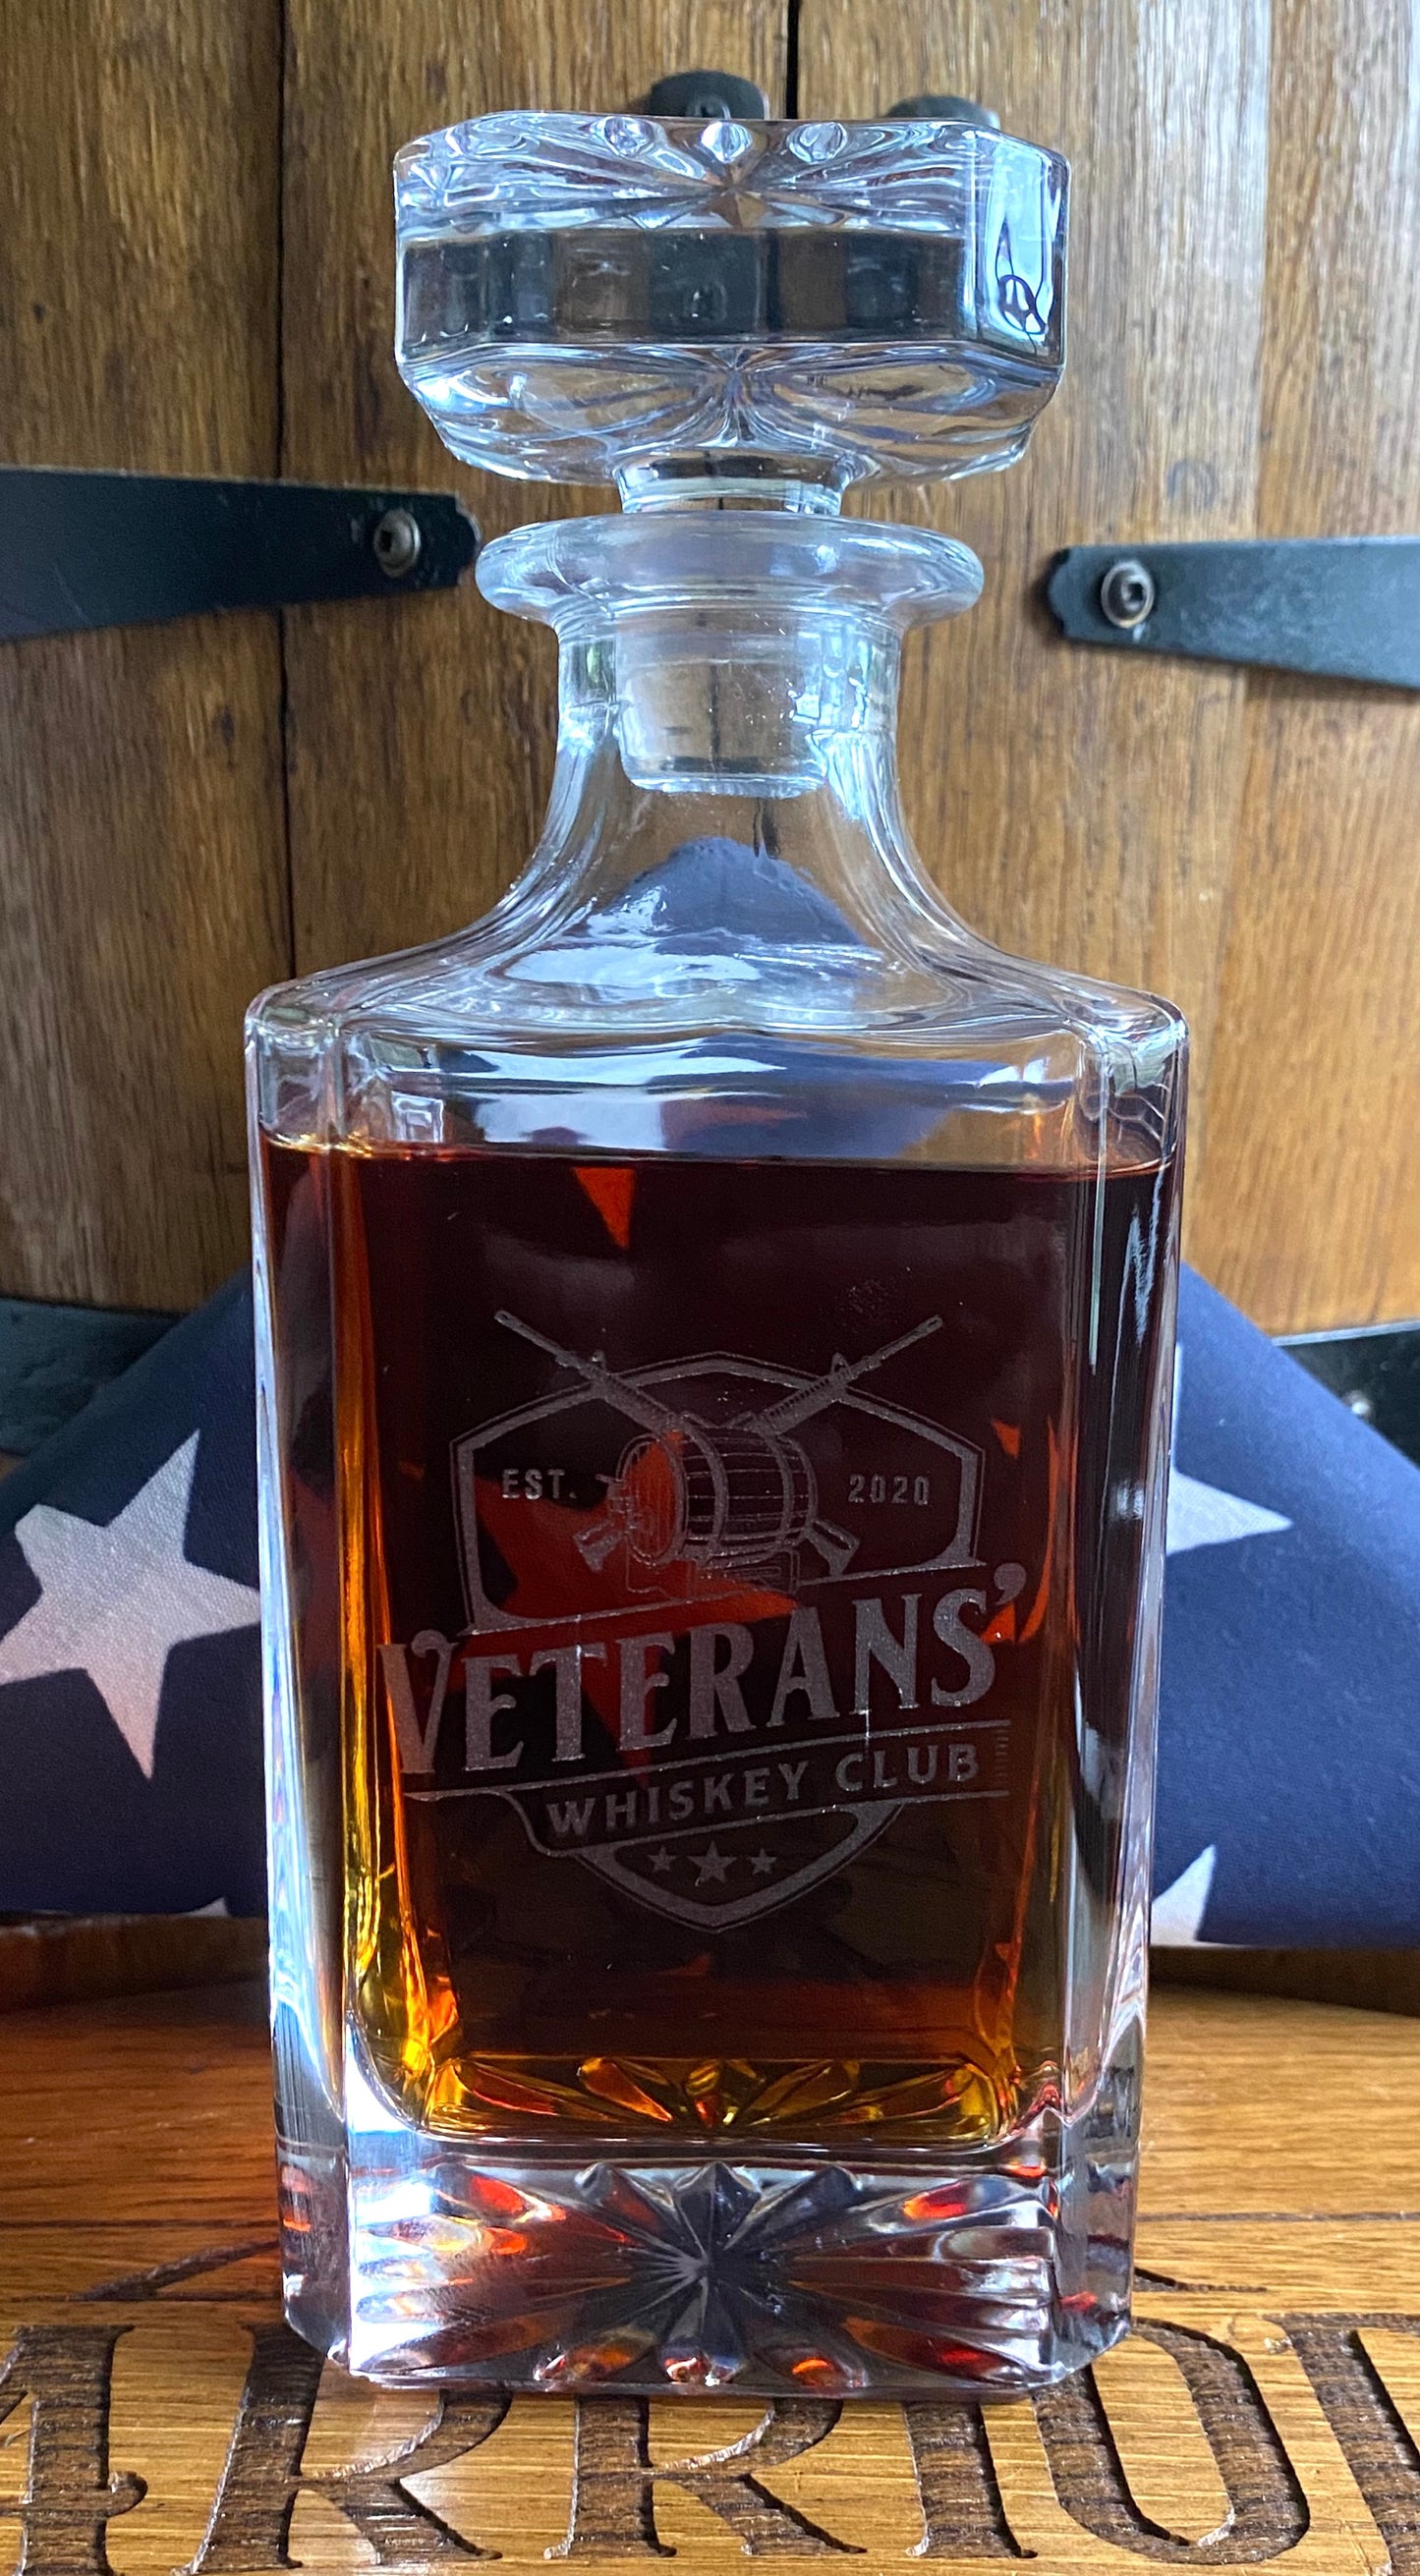 Warriors & Whiskey / Veterans' Whiskey Club Decanter